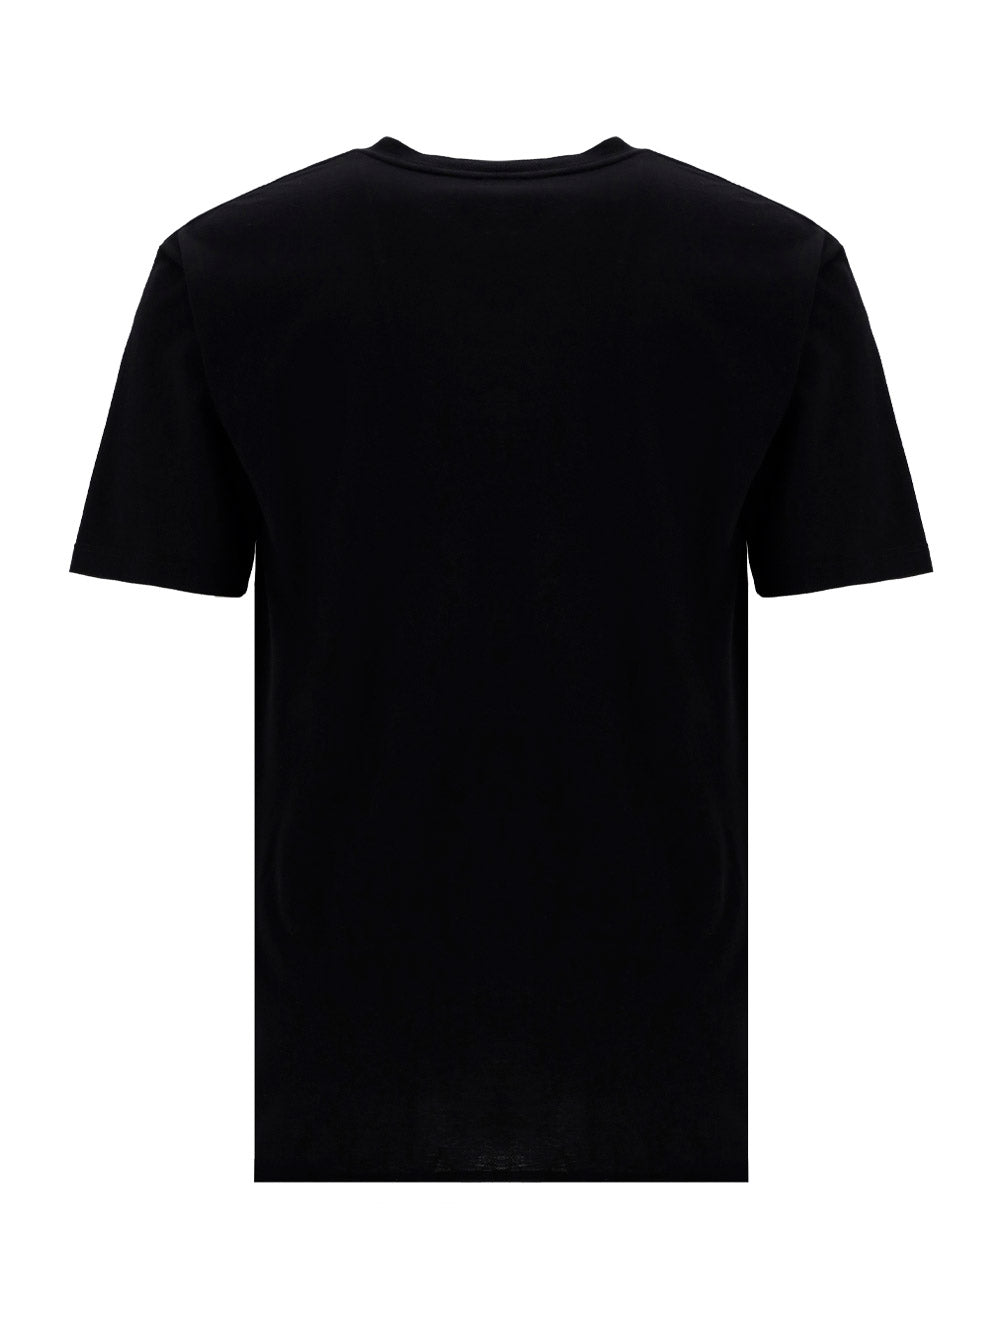 Signature T-Shirt - Black.